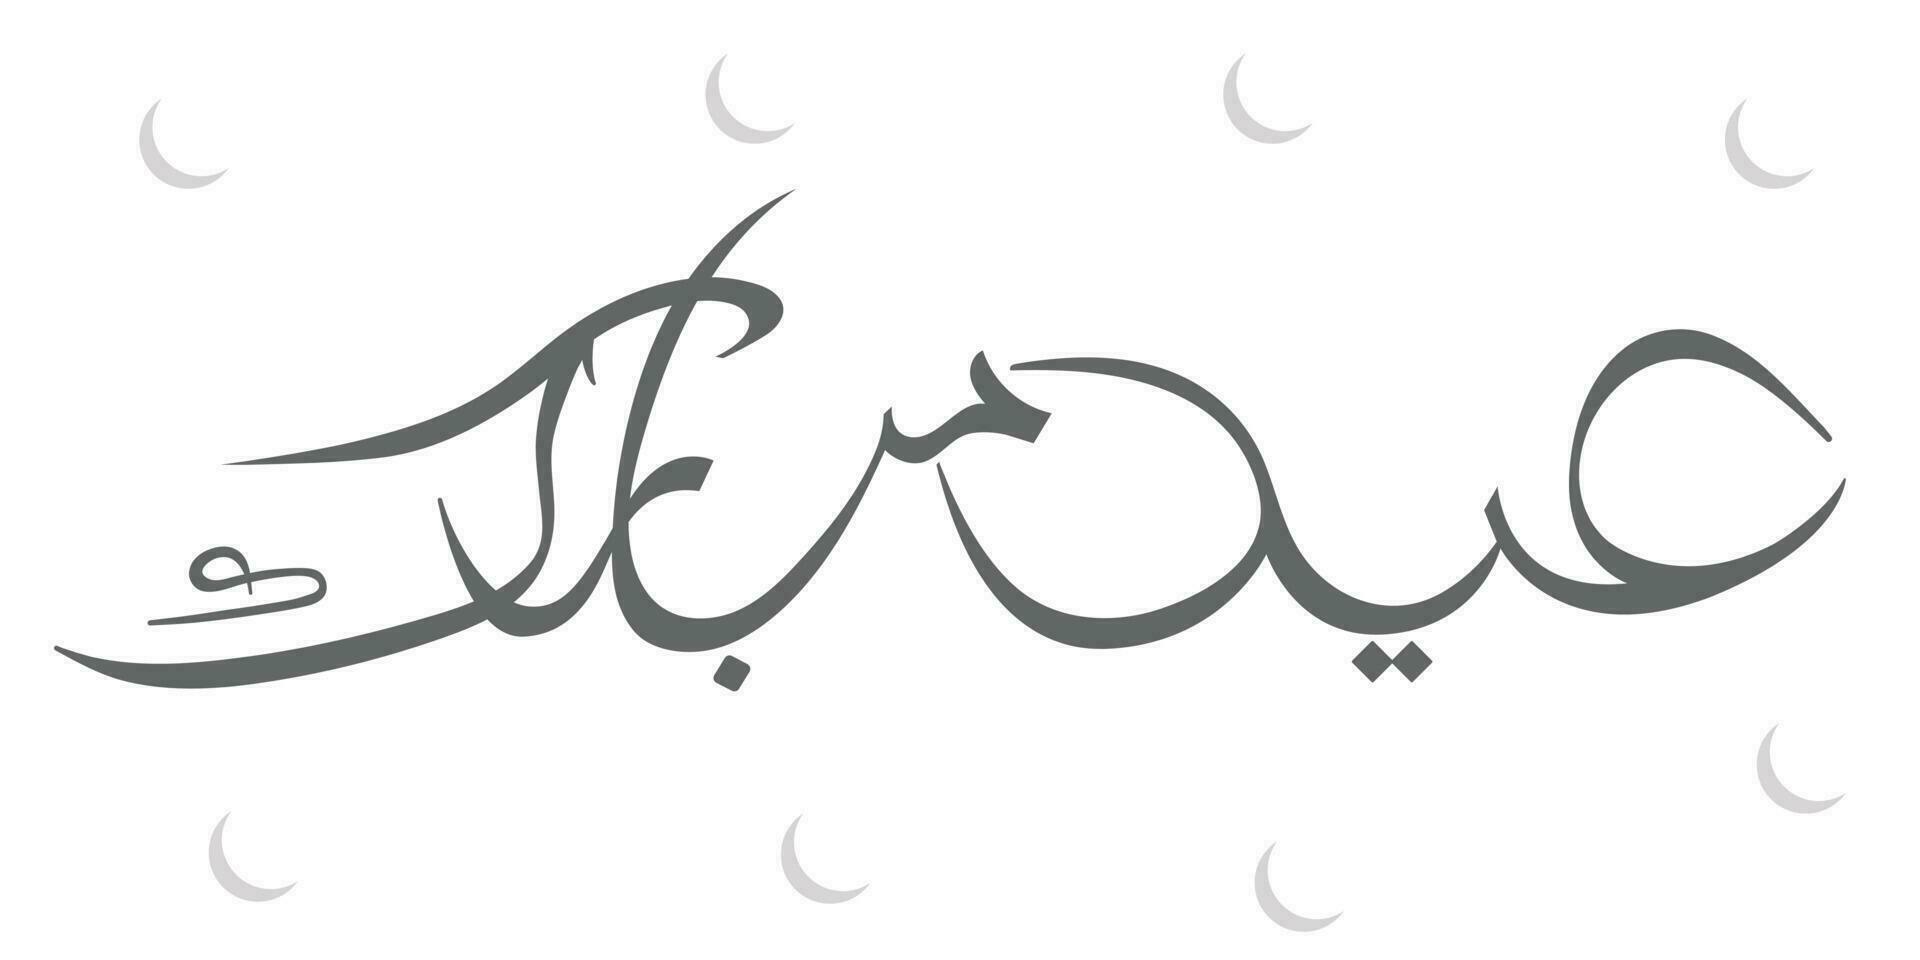 Urdu Calligraphy Of Eid Mubarak With Grey Crescent Pattern On White Background Vector Illustration